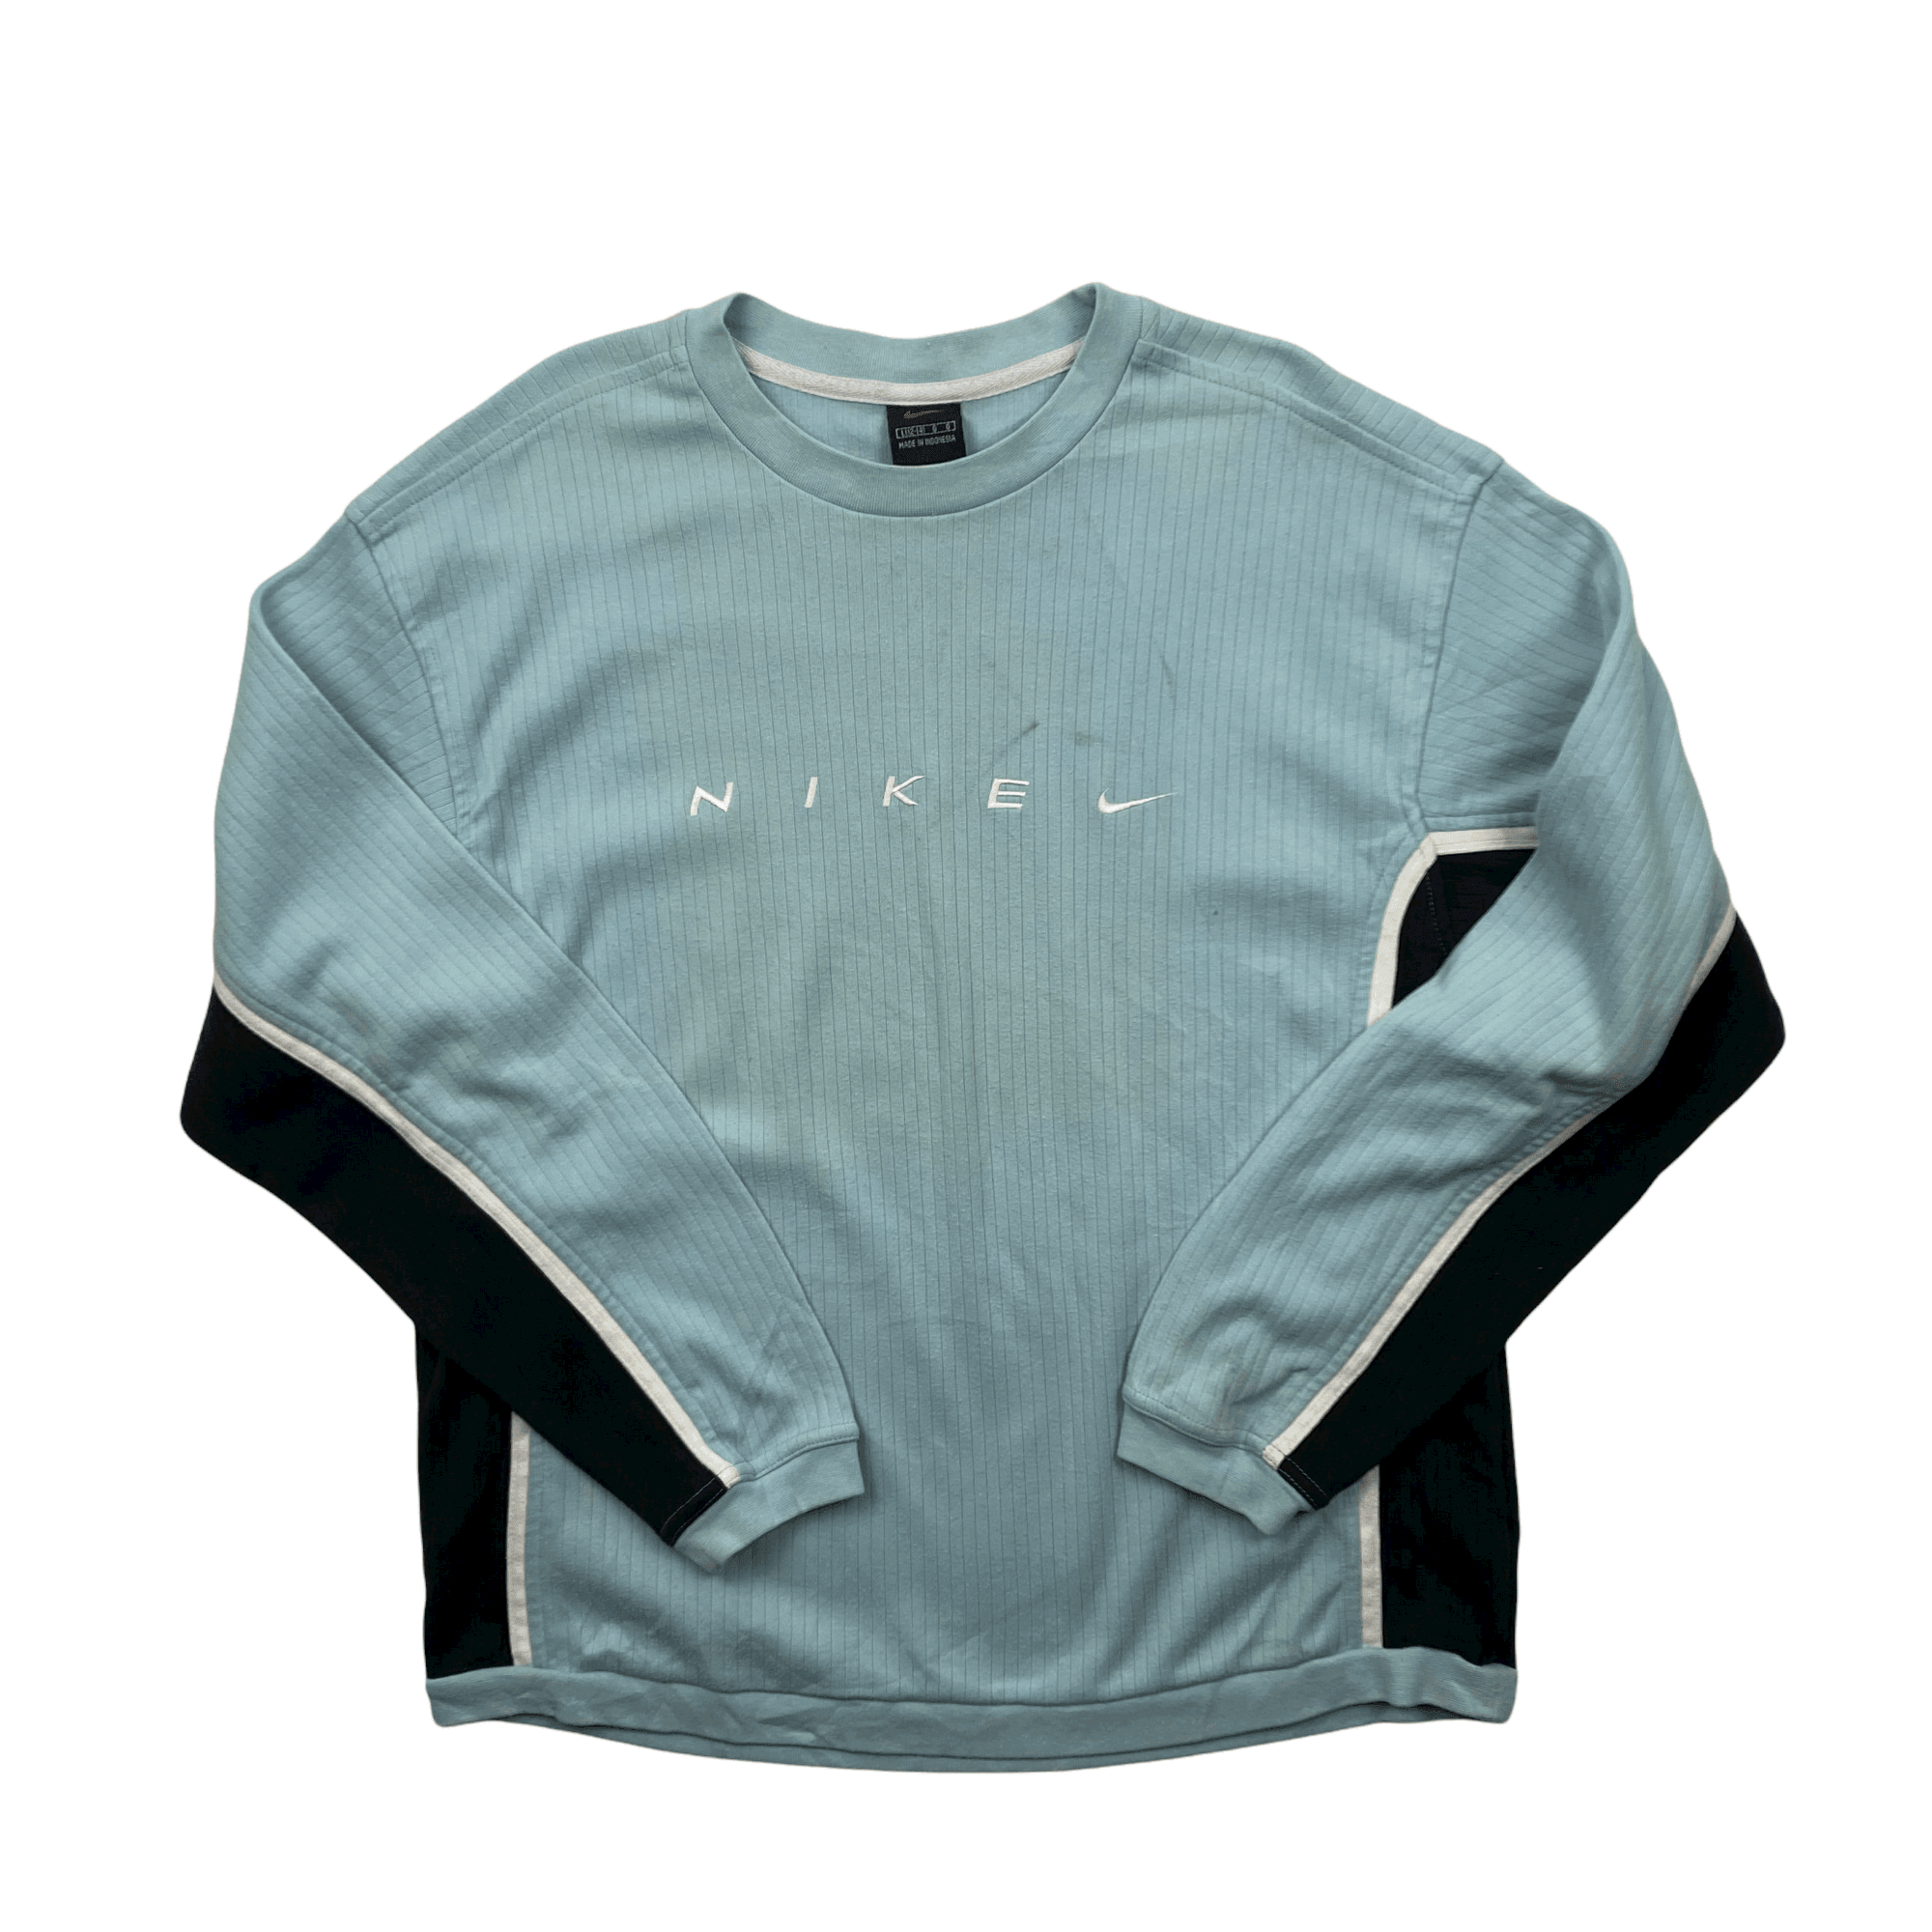 Vintage 90s Women's Baby Blue + Black Nike Spell-Out Sweatshirt - Large - The Streetwear Studio